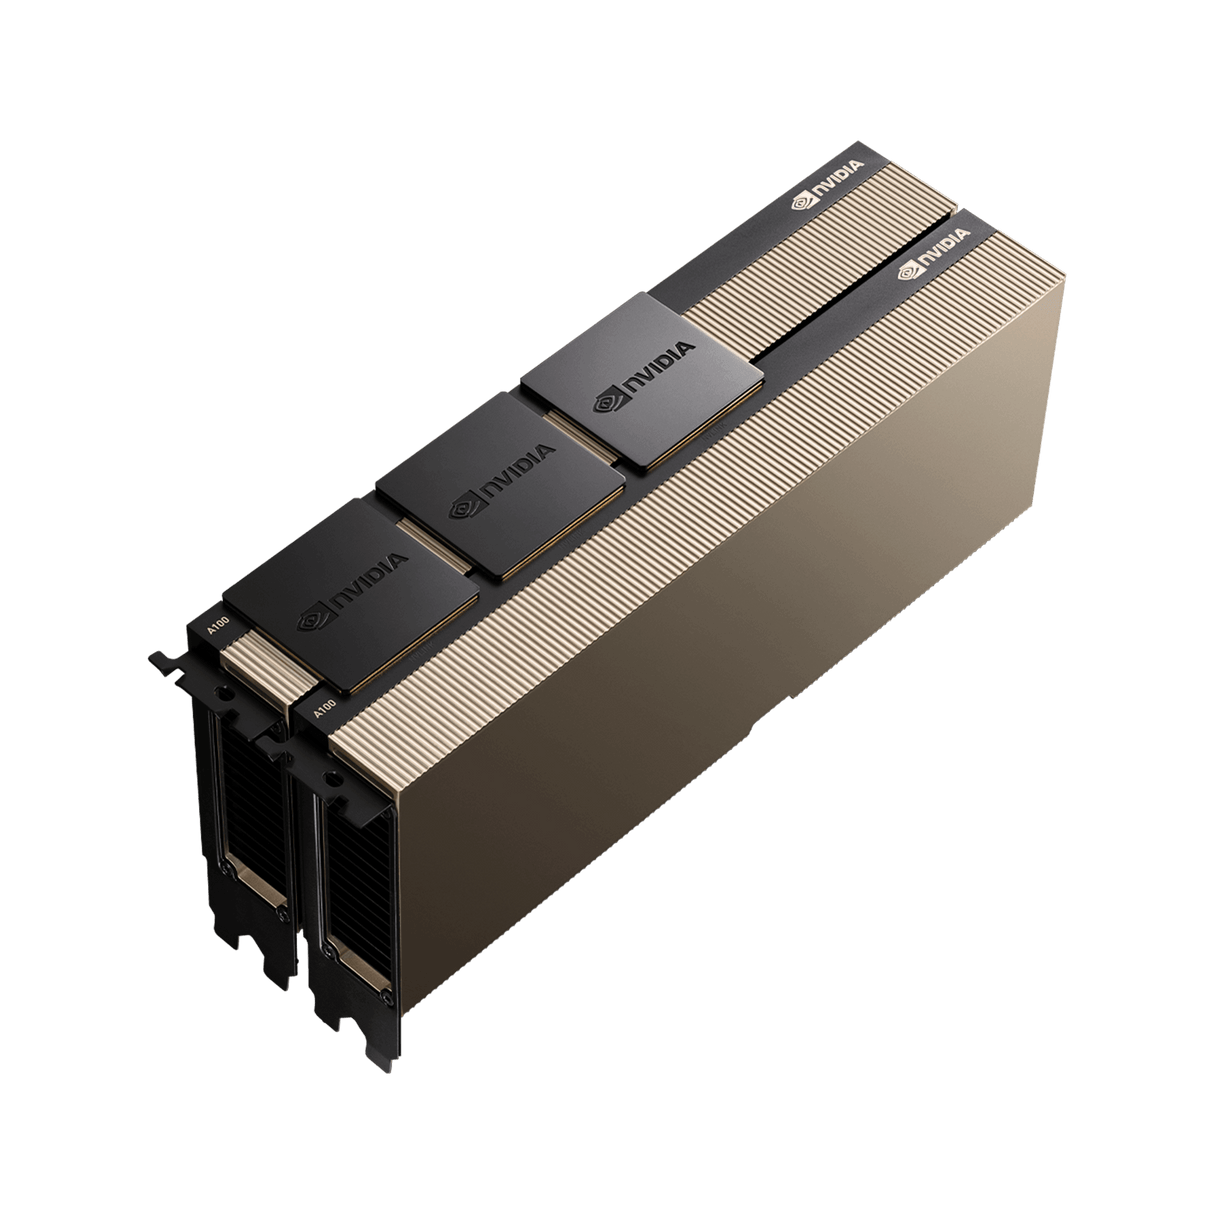 PNY NVIDIA A100 PCIe 4.0 x 16 Graphics Card 80GB - C3Aero LLC